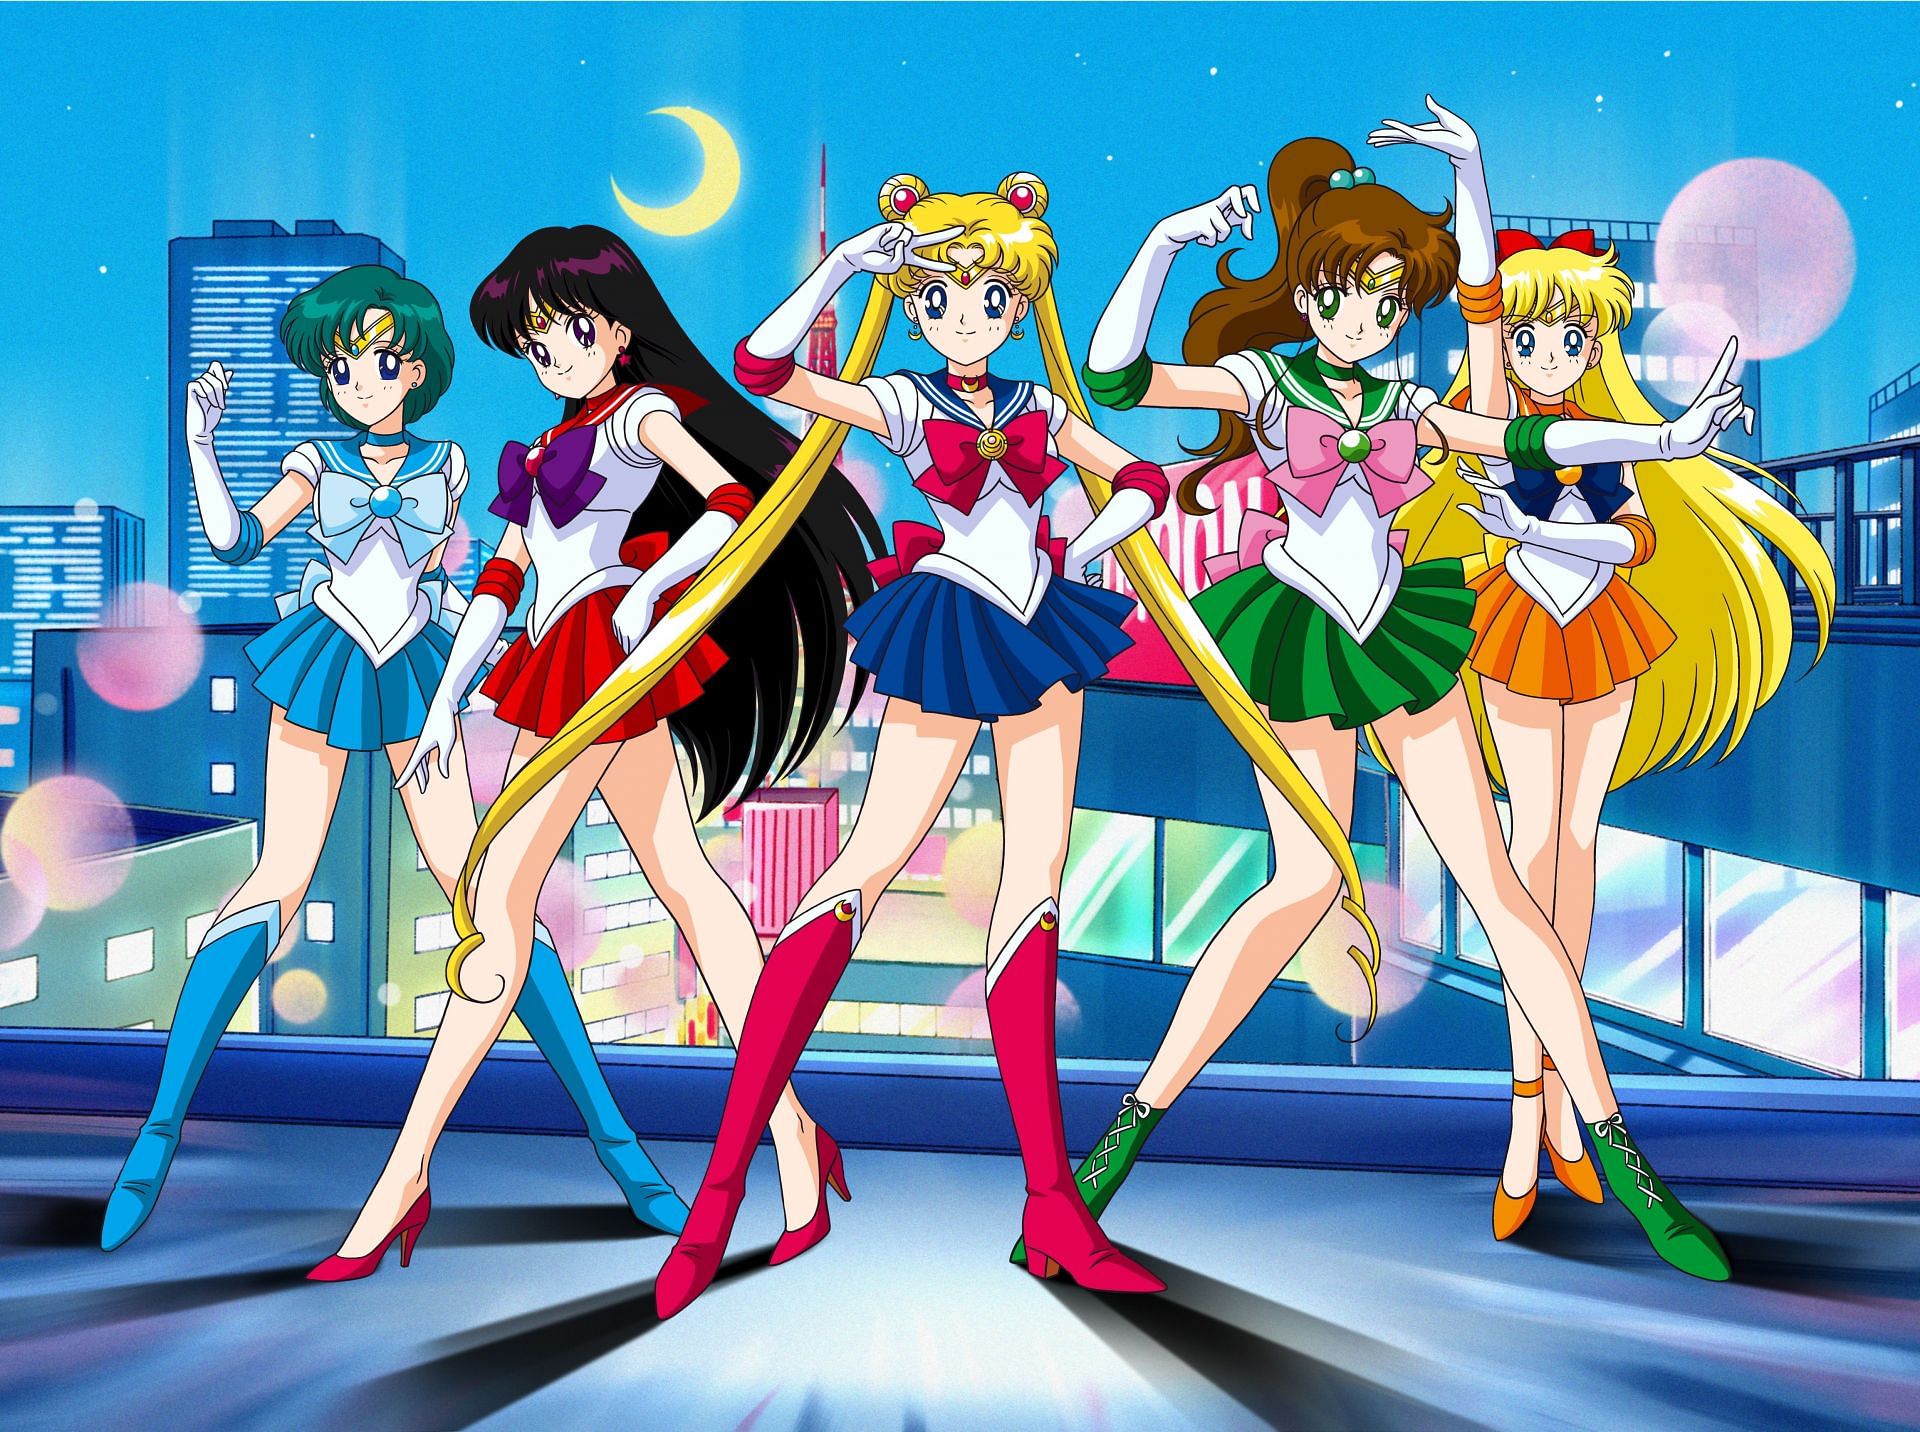 The original Senshi from the original Sailor Moon (Image credits: Sailor Moon, Kandosha, Toei Animation)